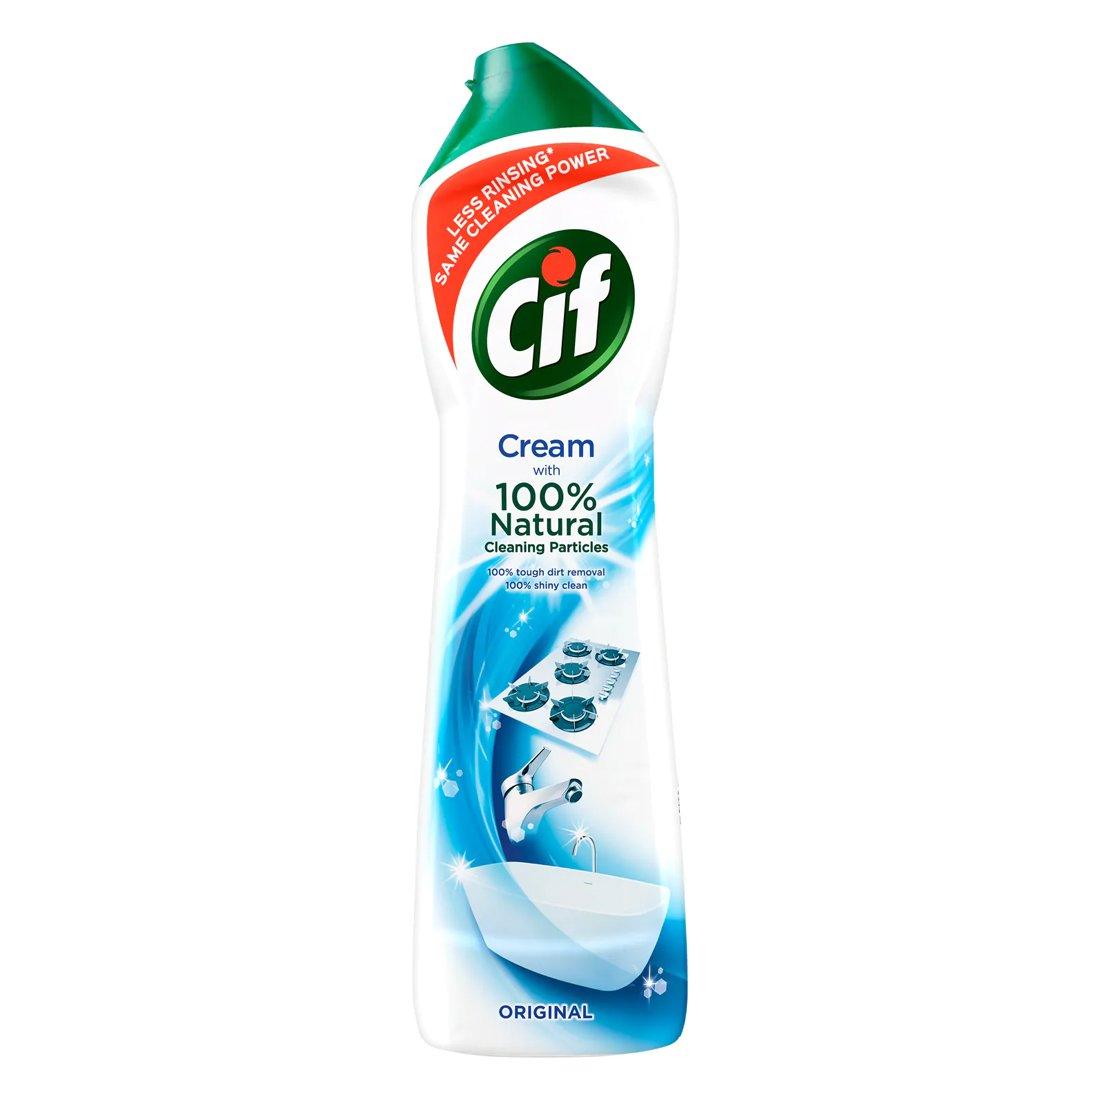 Cif Cream Cleaner - Original White 500ml - Vending Superstore